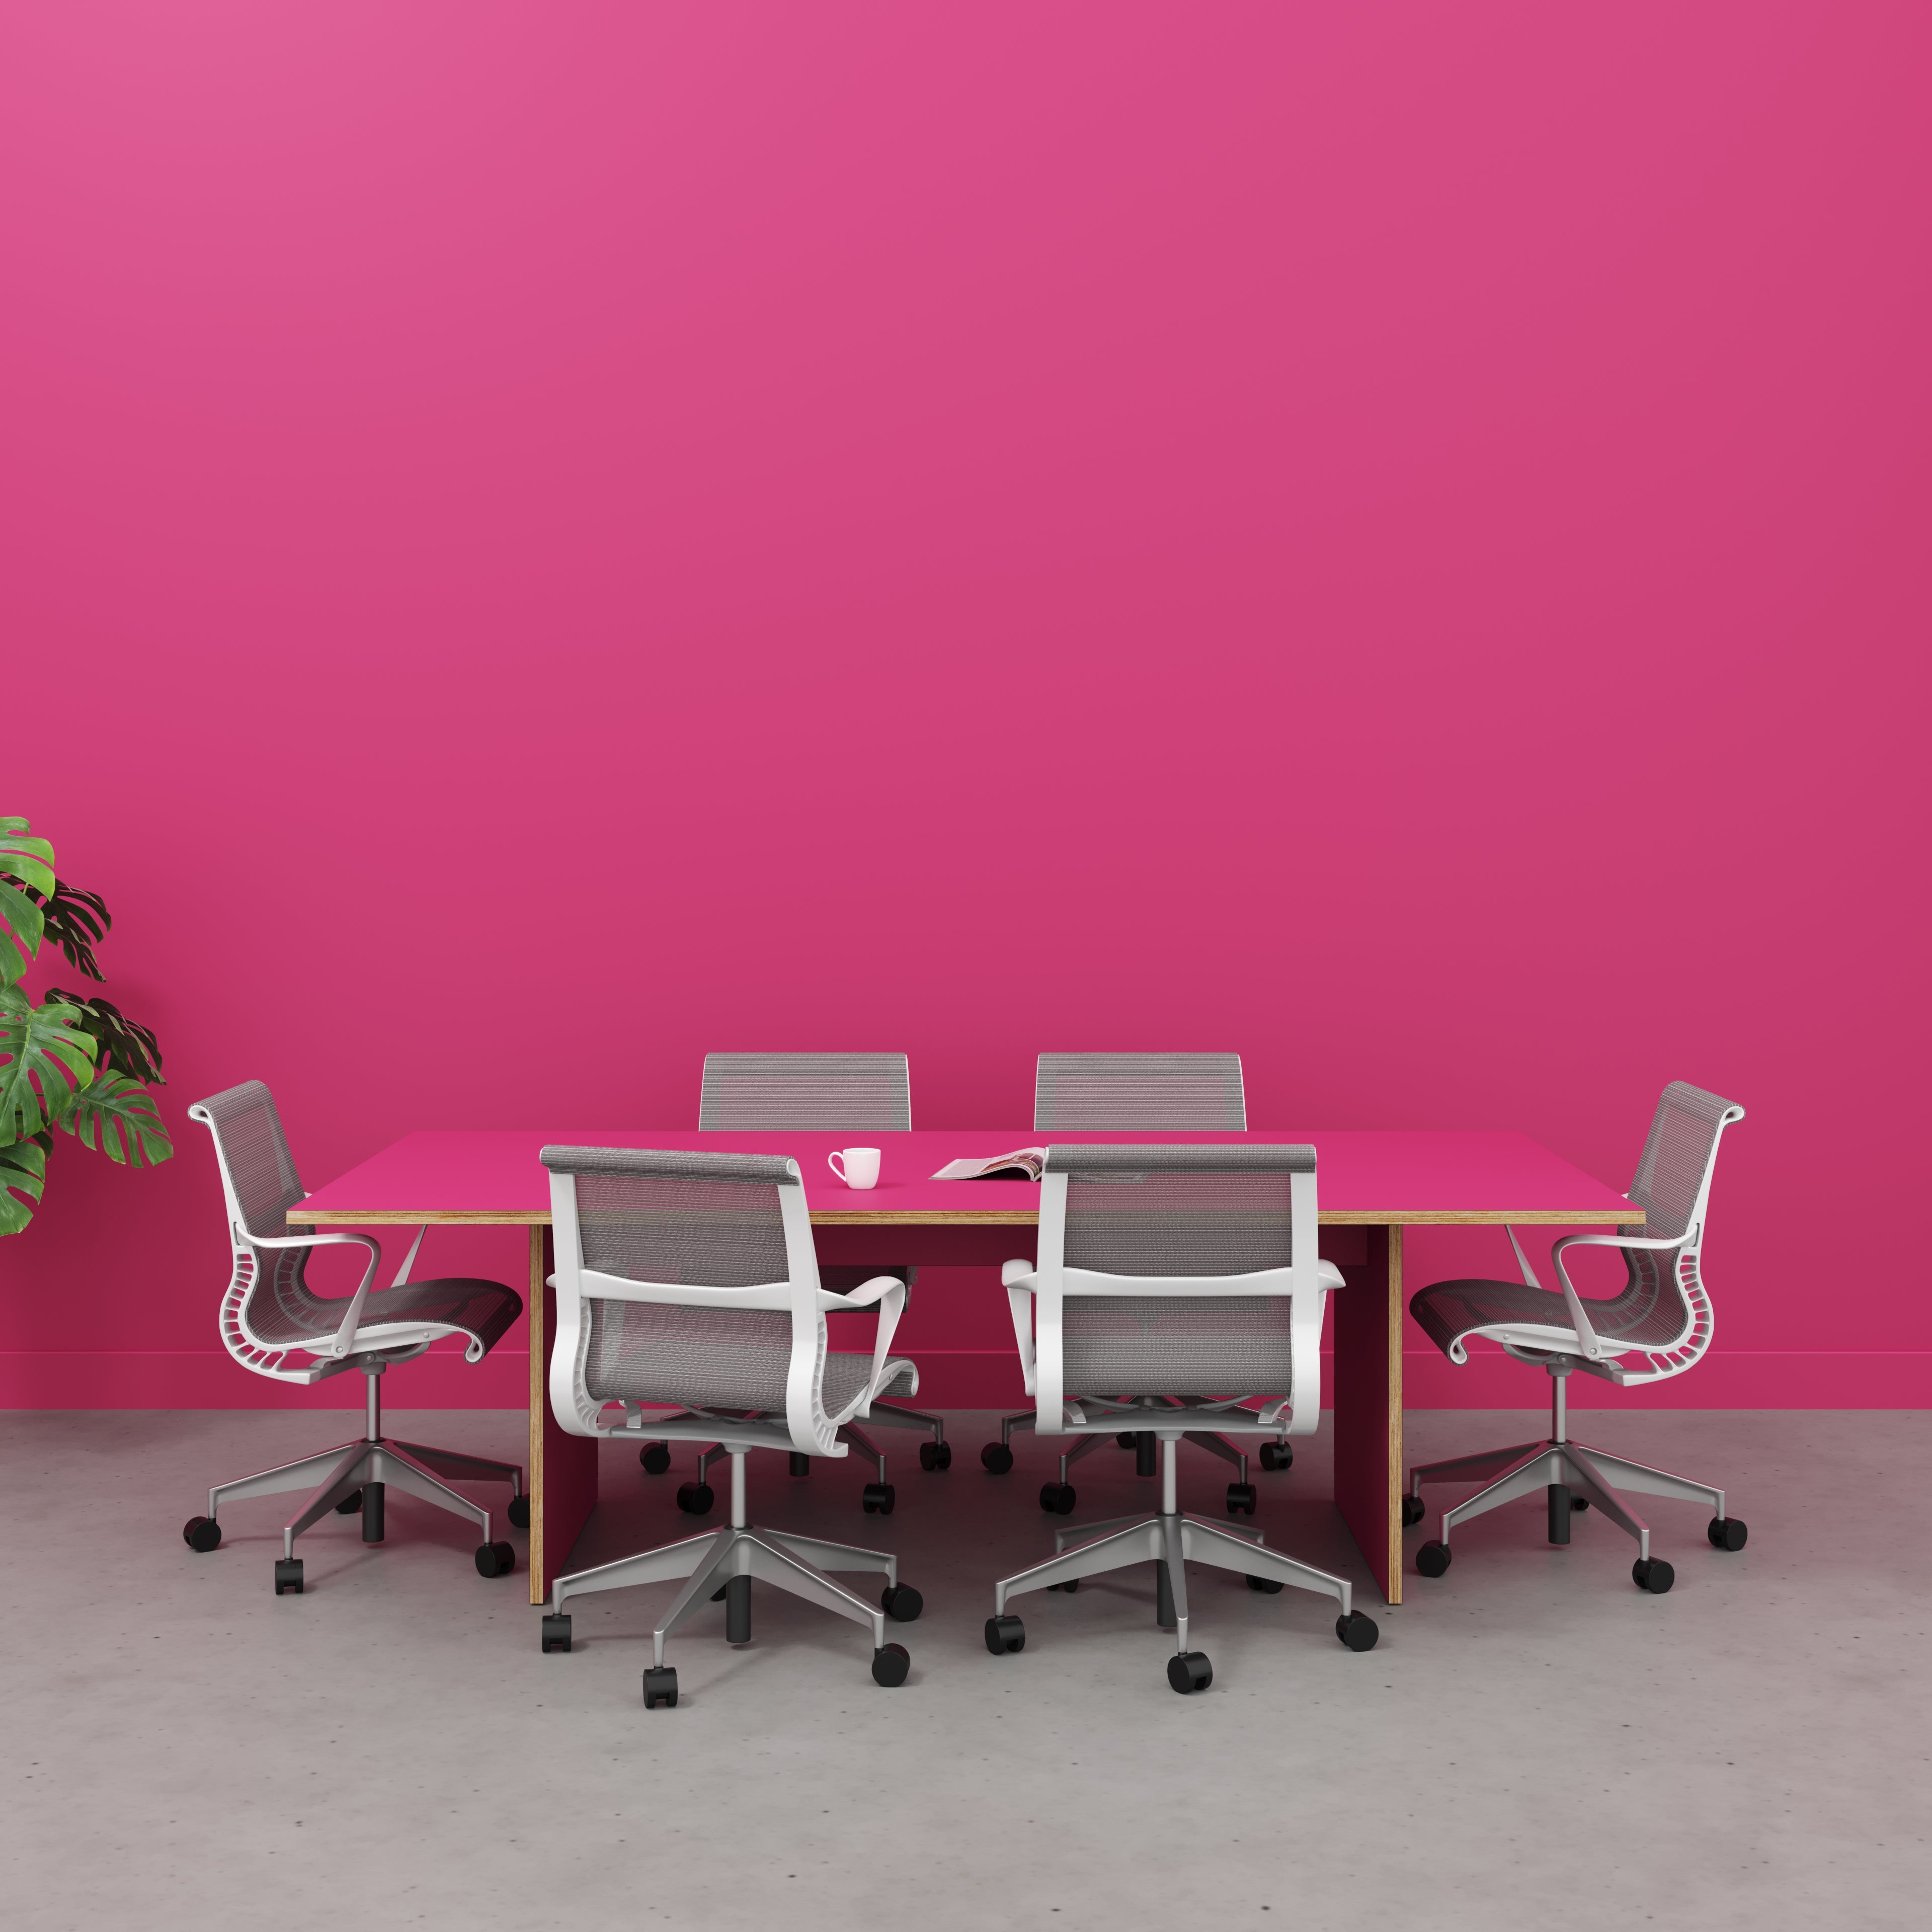 Platform Table - Formica Juicy Pink - 2400(w) x 1200(d) x 750(h)